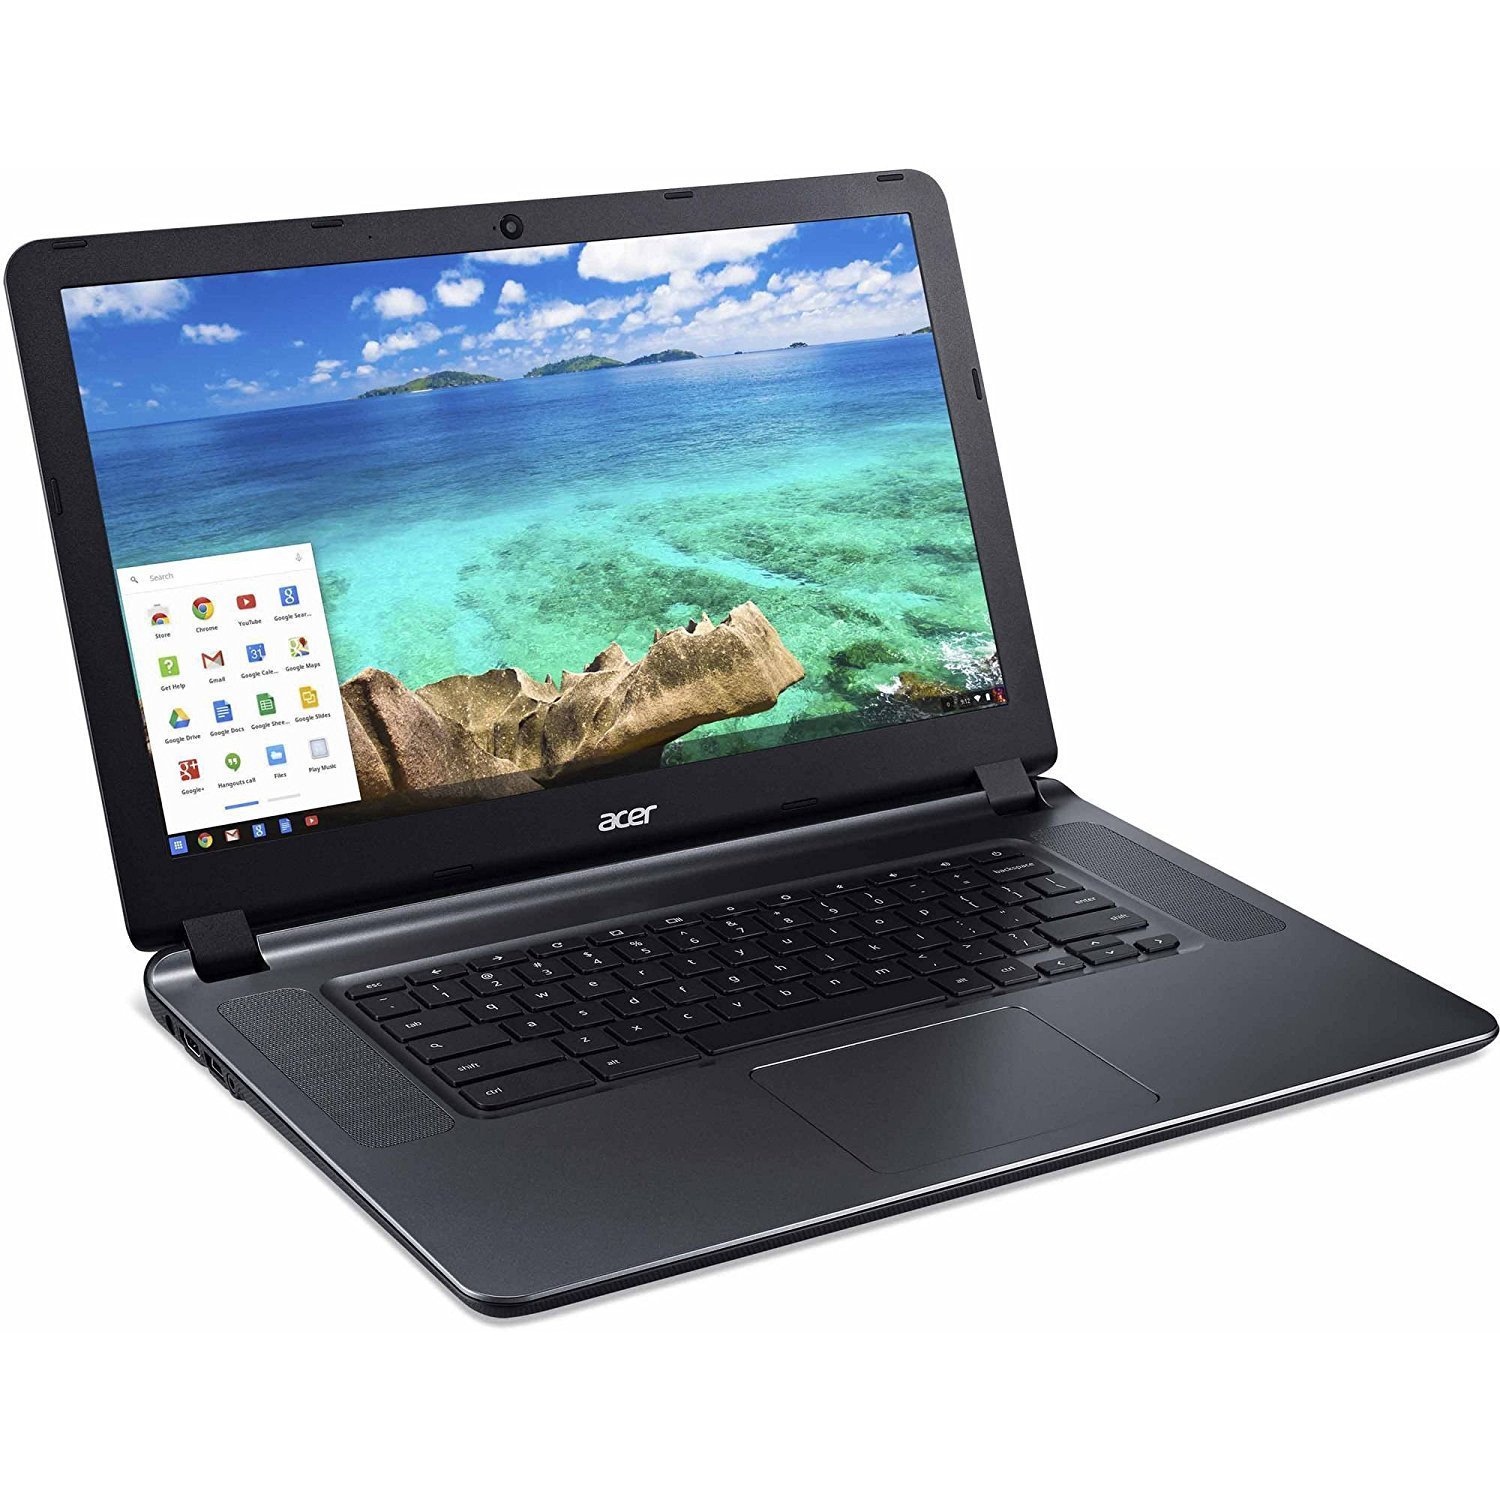 2017 Acer Flagship Laptop